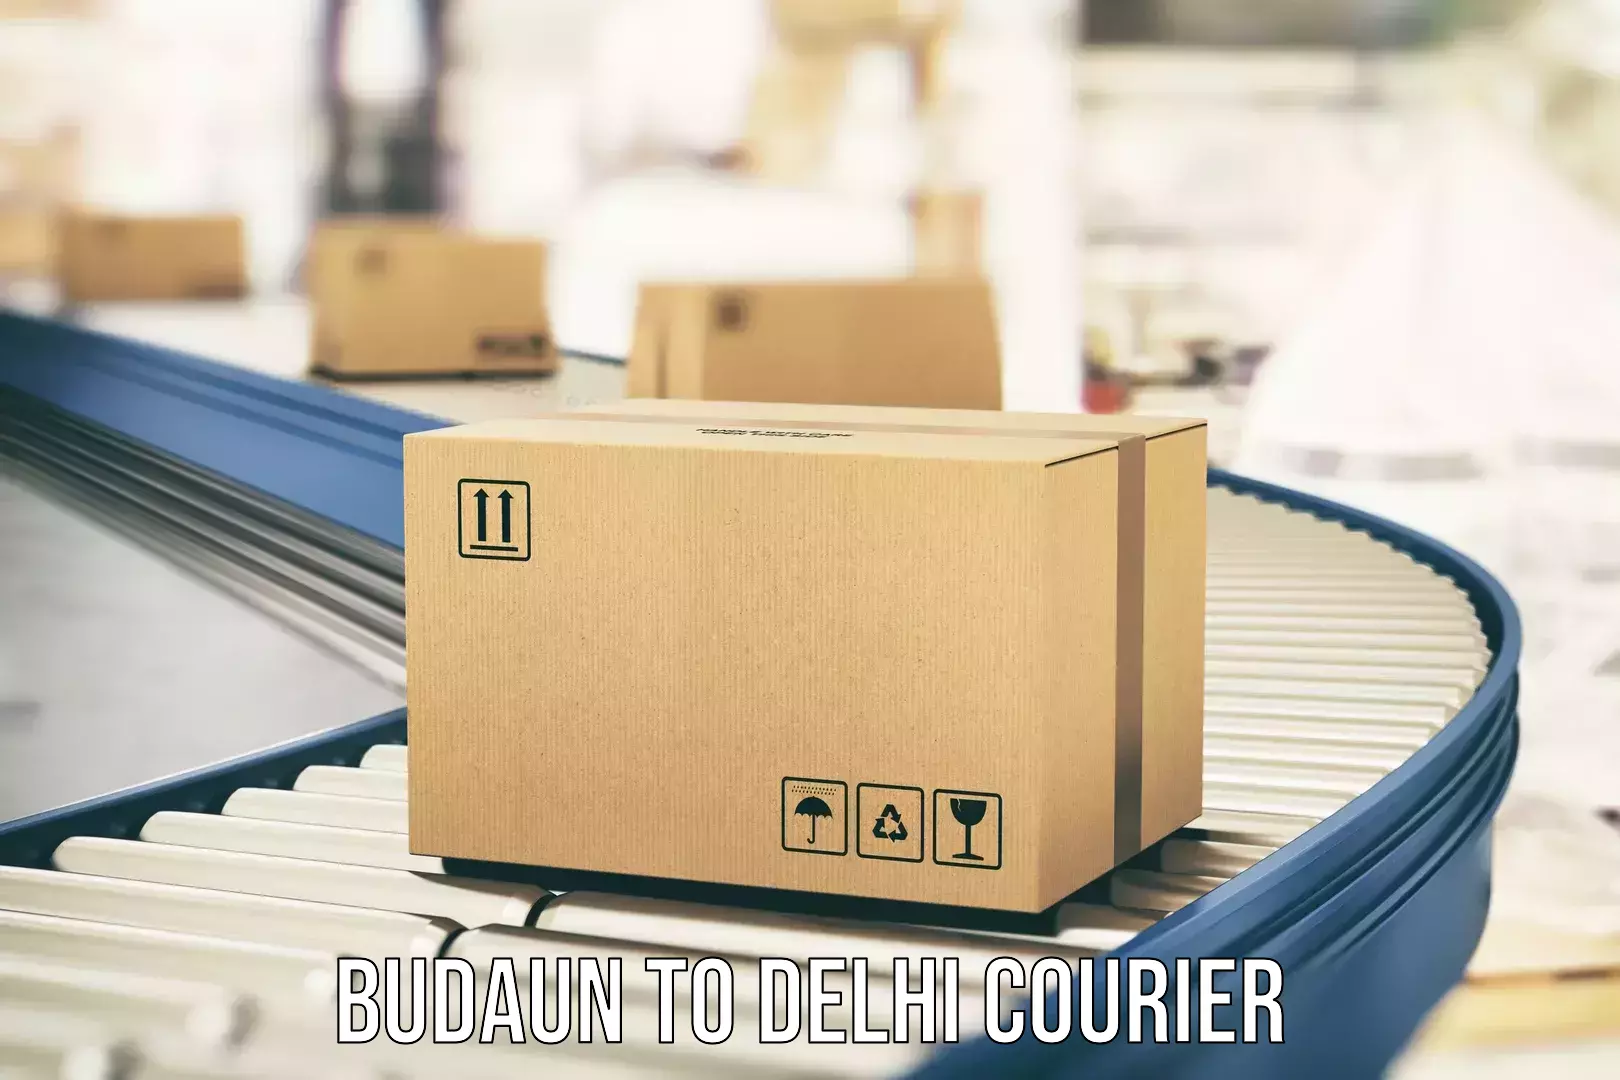 Home goods moving company Budaun to NCR